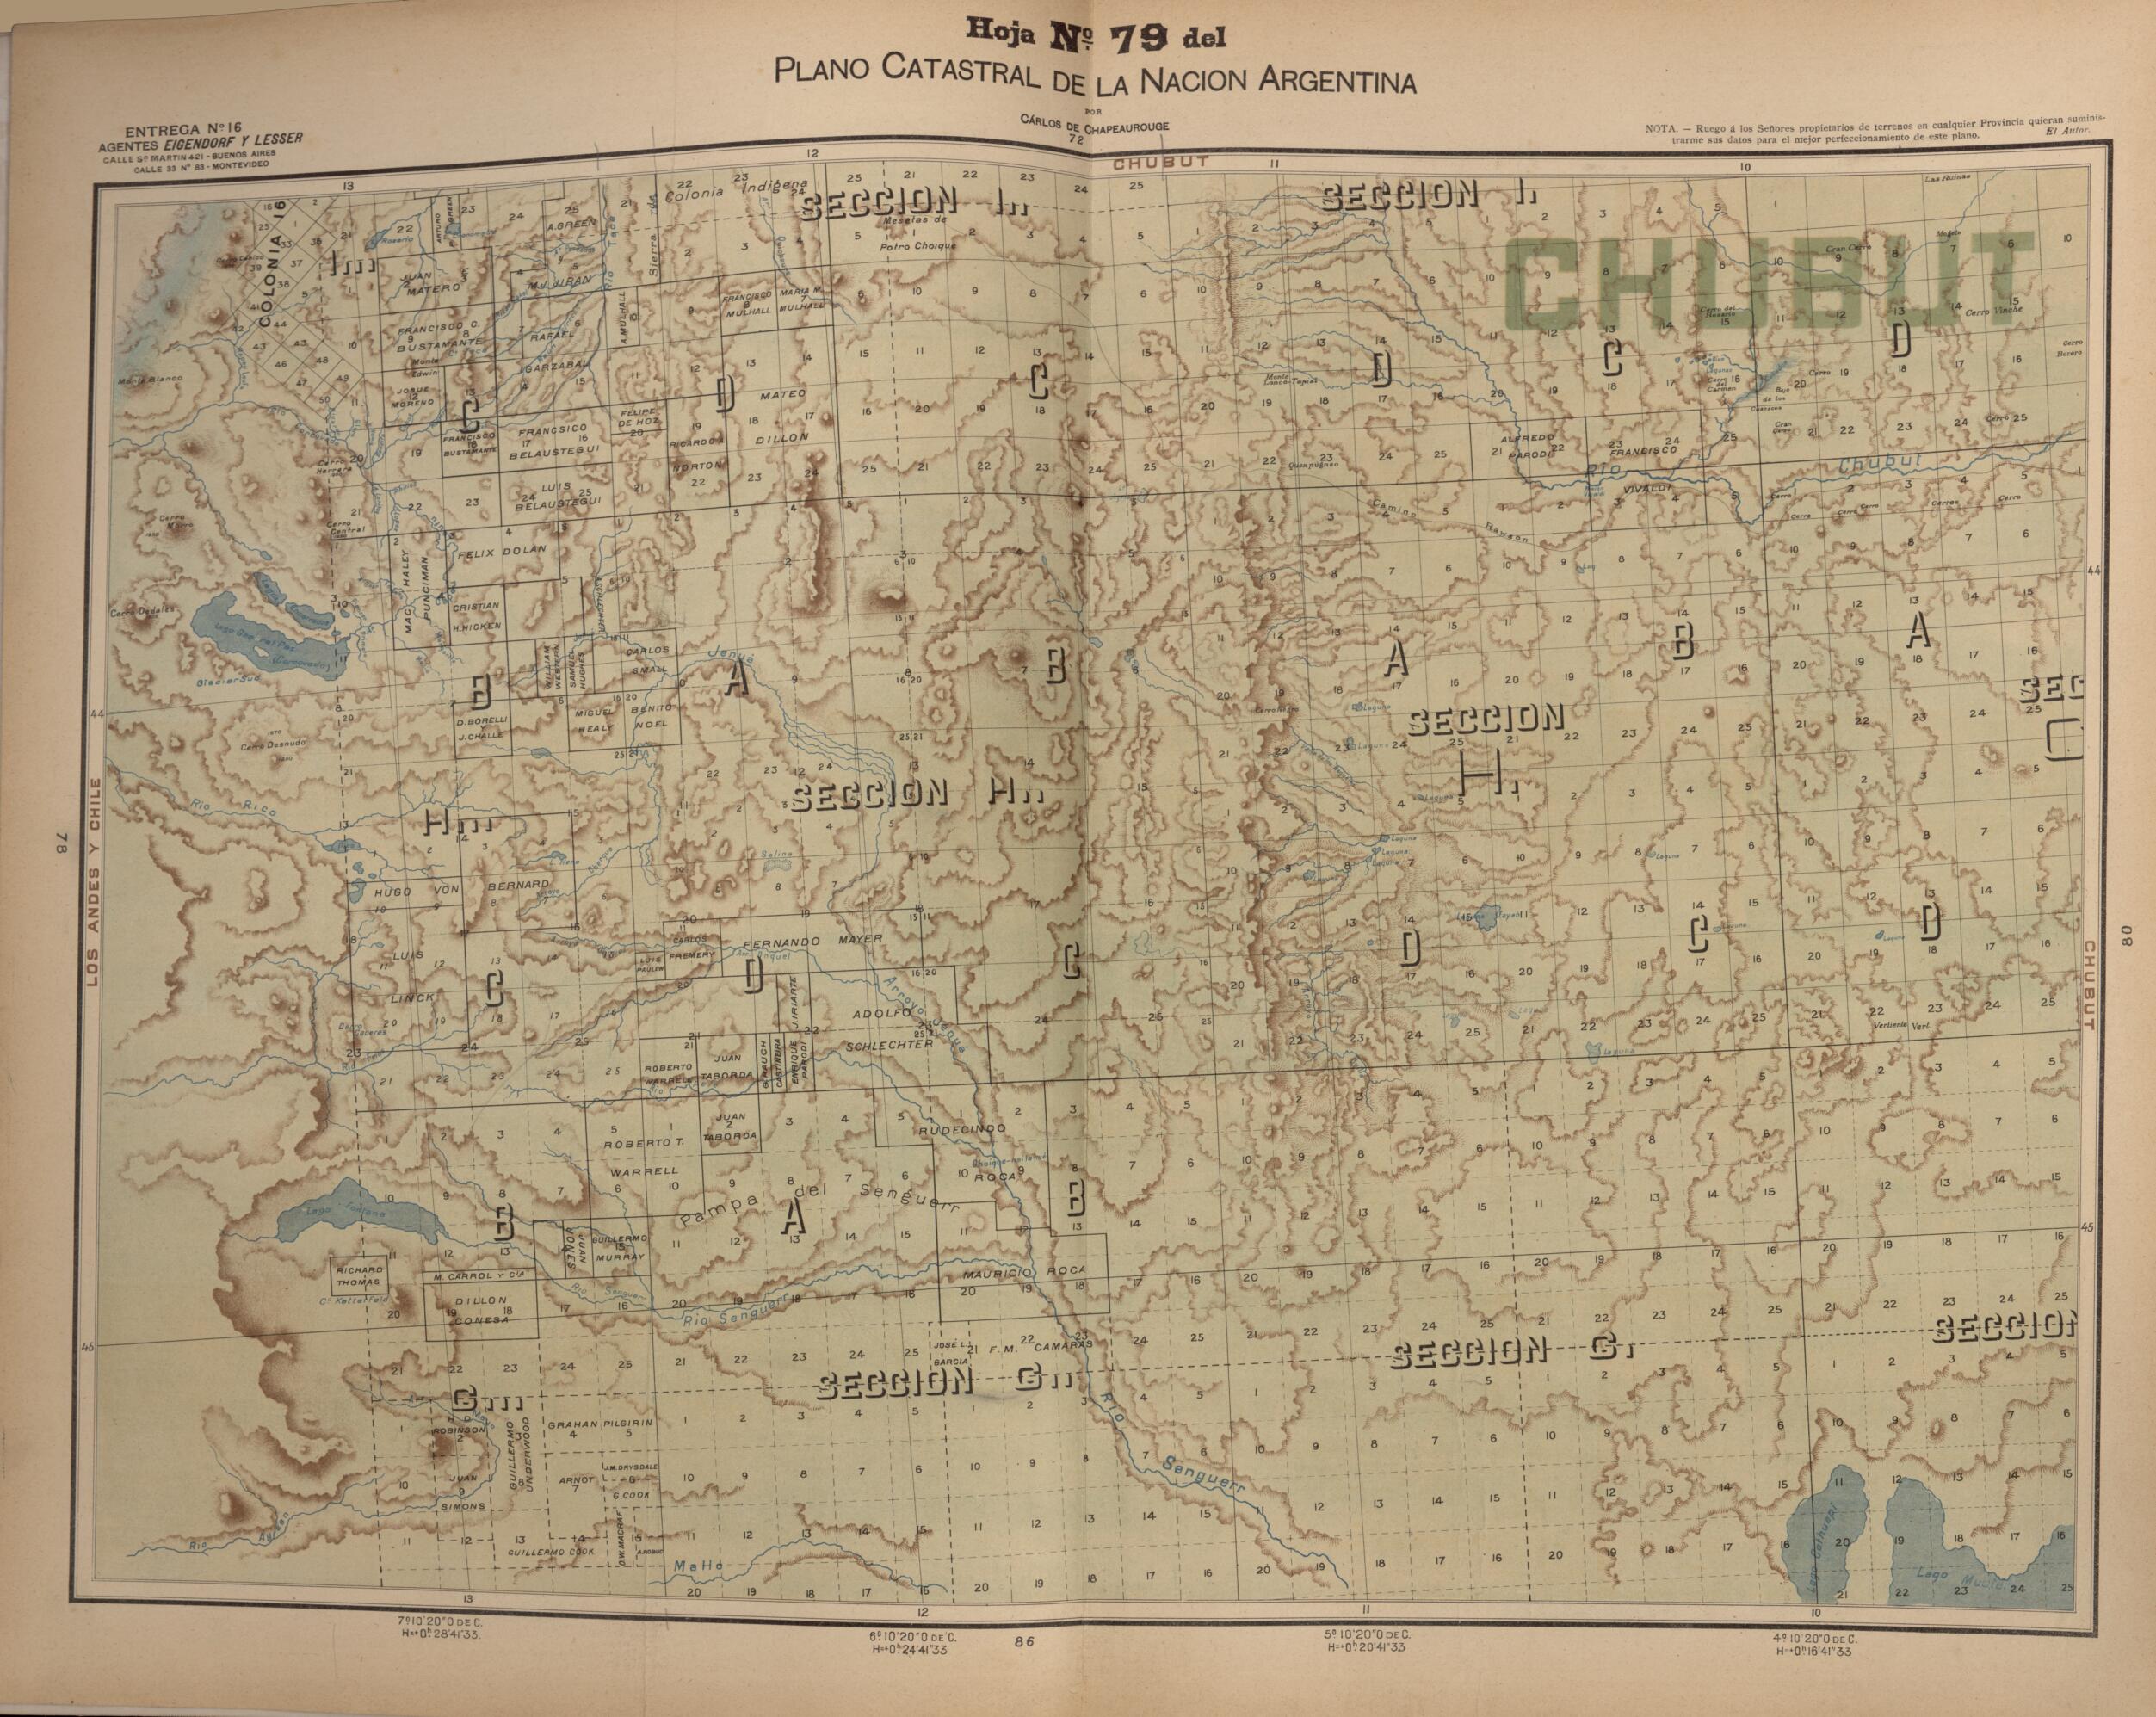 This old map of Plano Catastral De La Nacion Hoja No. 79 from República Argentina from 1905 was created by Carlos De Chapeaurouge in 1905